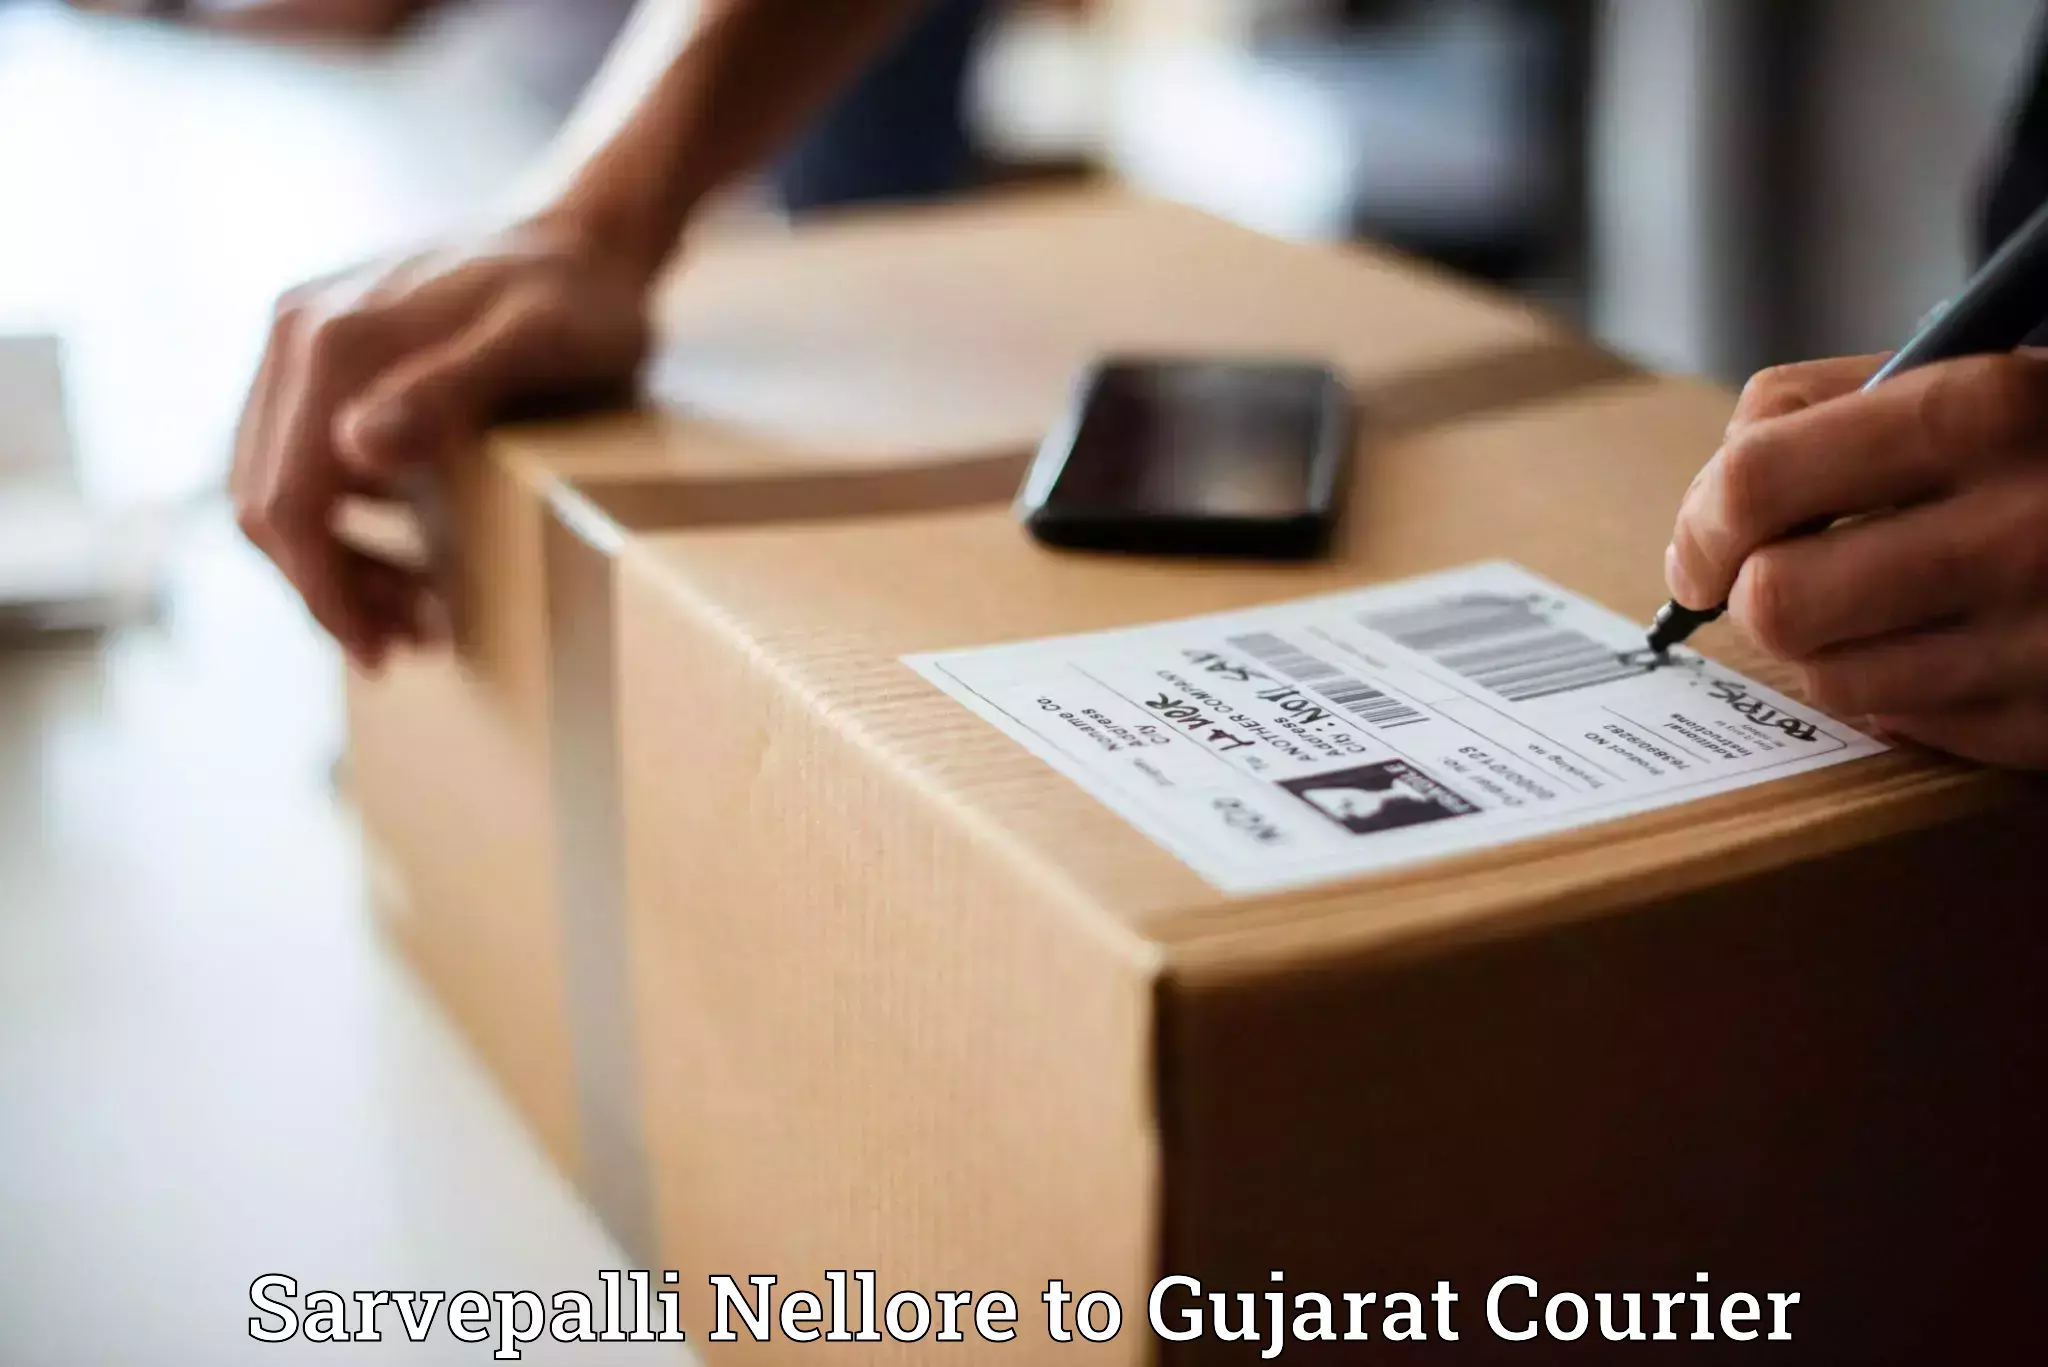 Small business couriers in Sarvepalli Nellore to Patan Gujarat